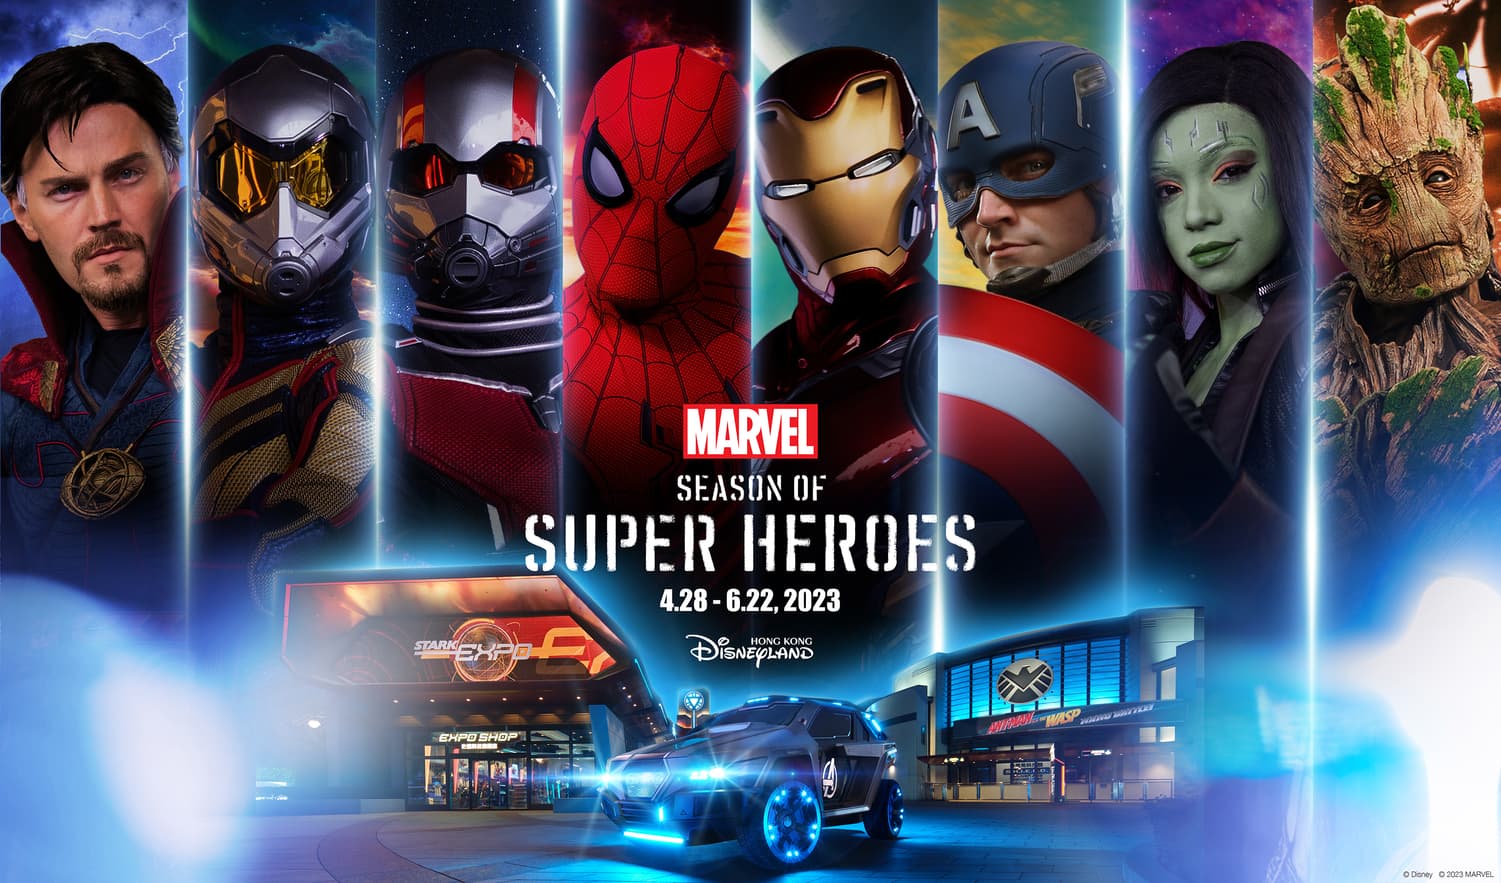 Marvel Season of Super Heroes Arrives at Hong Kong Disneyland